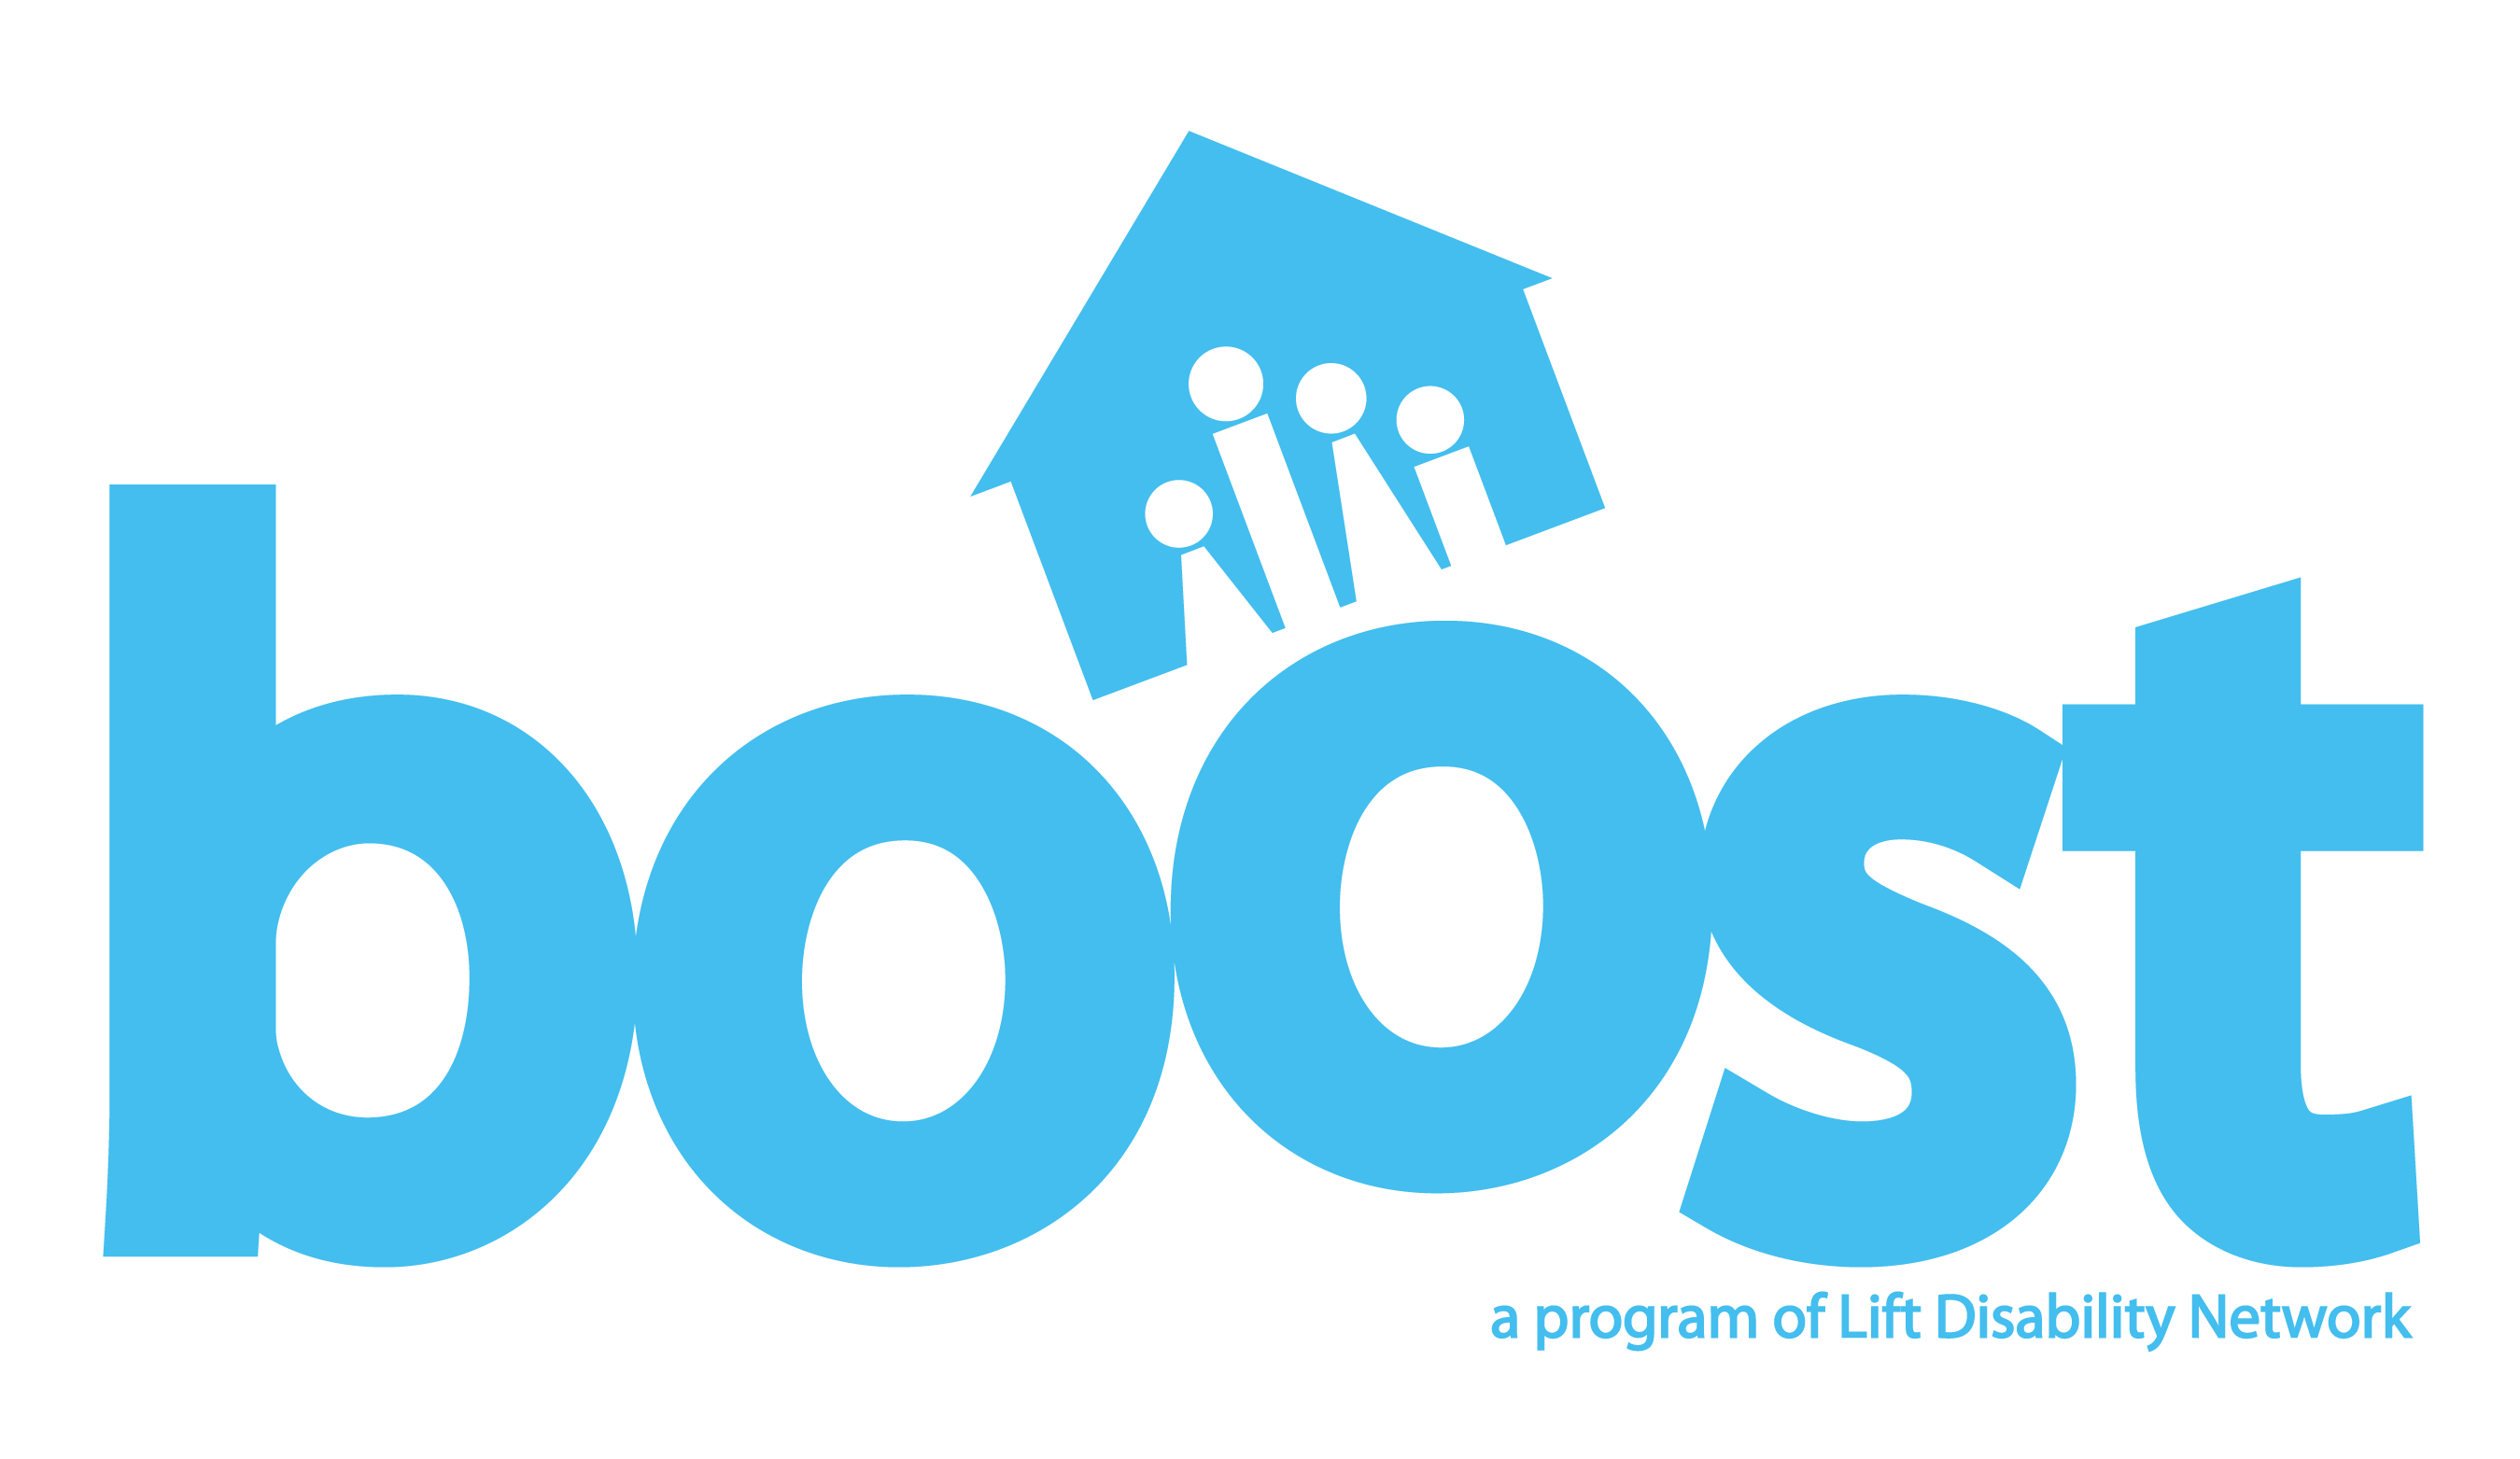 Image: lift disability network boost program logo. Color: blue